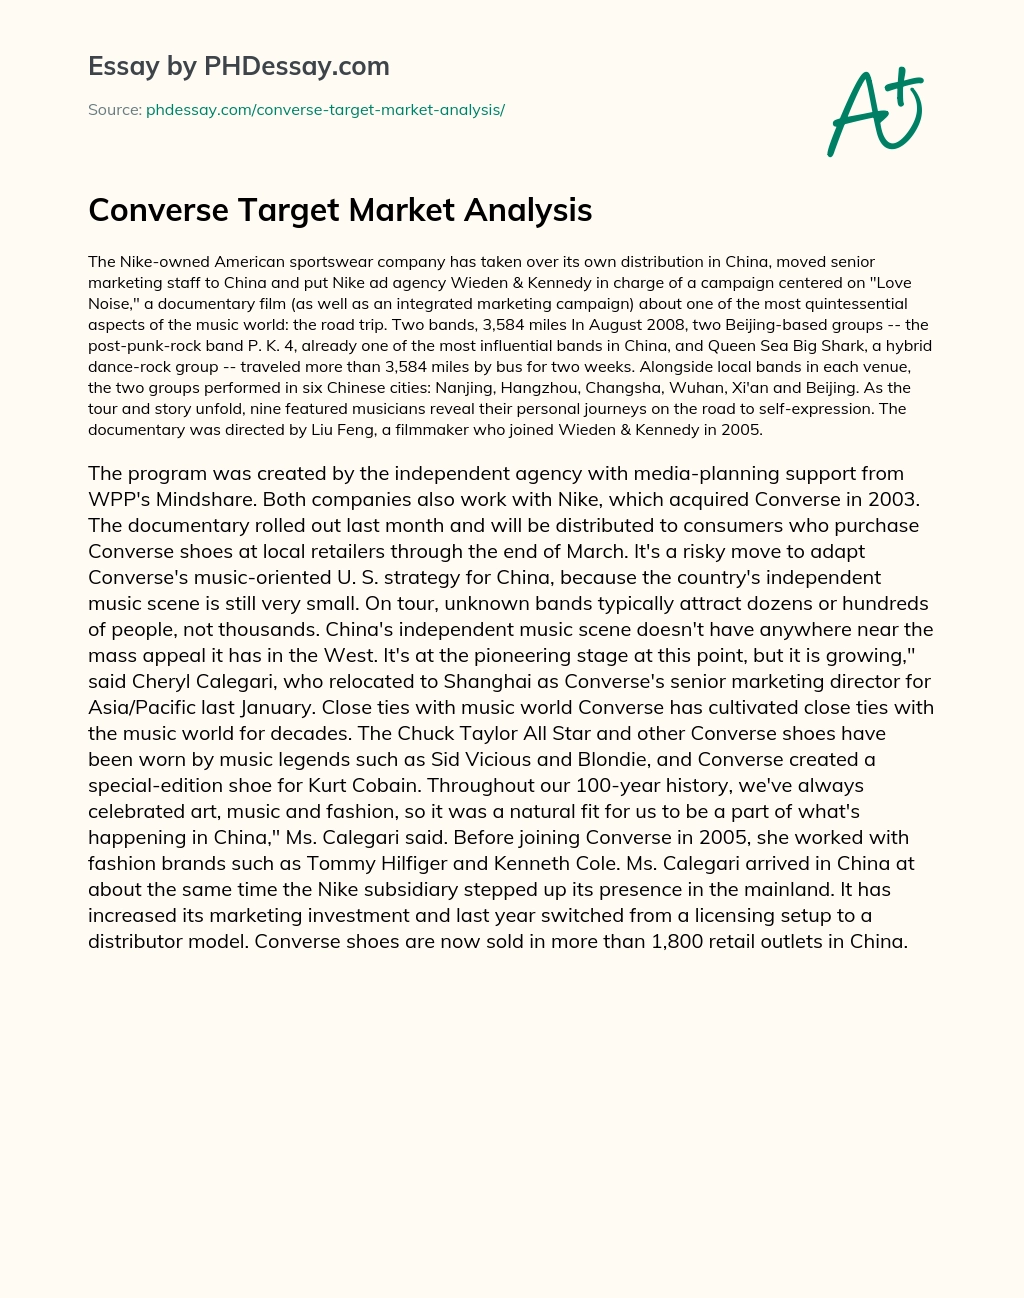 Converse Target Market Analysis essay